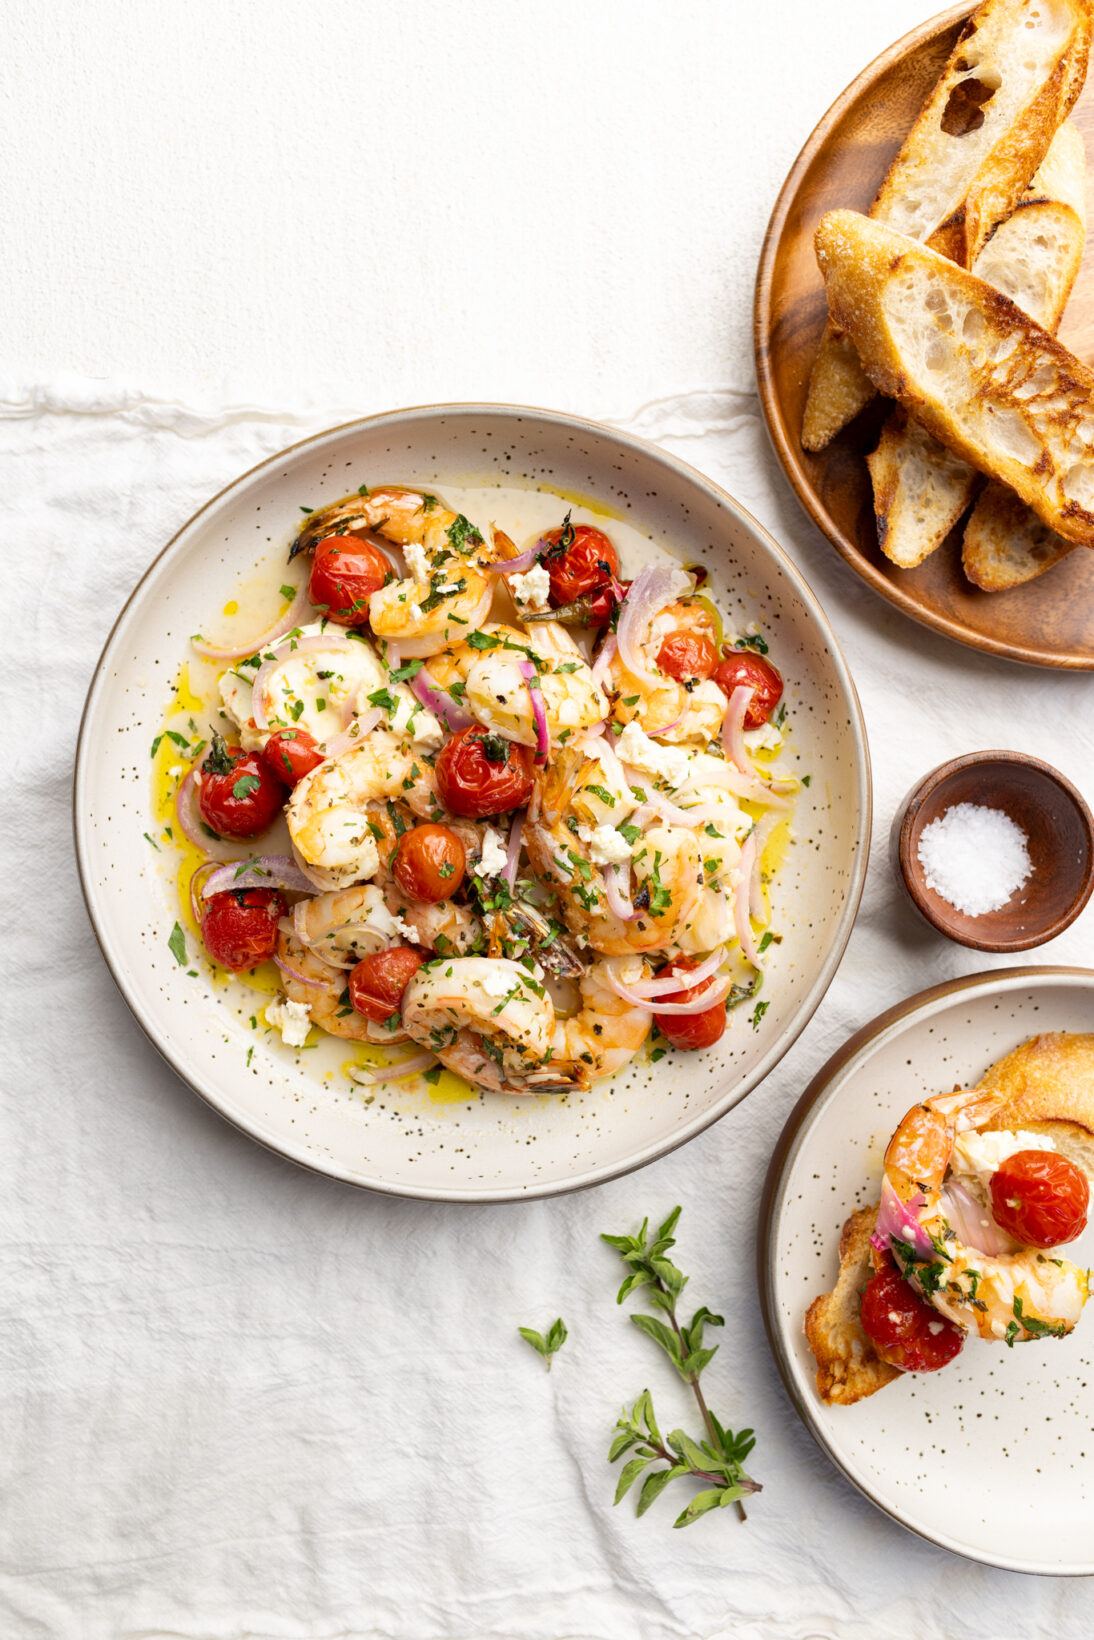 plated  Mediterranean shrimp and feta bake next to crusty bread